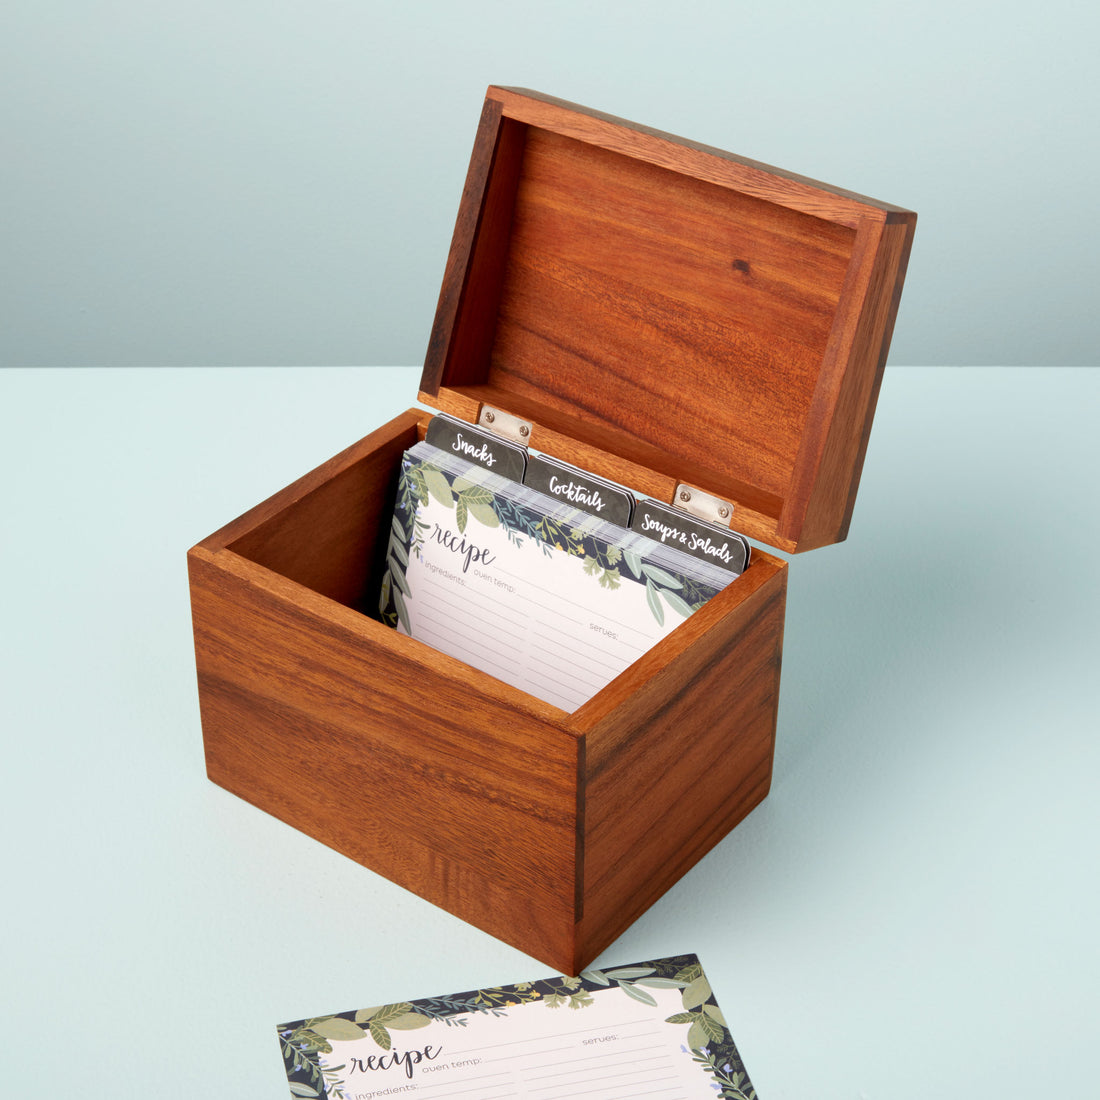 Acacia Wood Recipe Box &amp; Cards Set